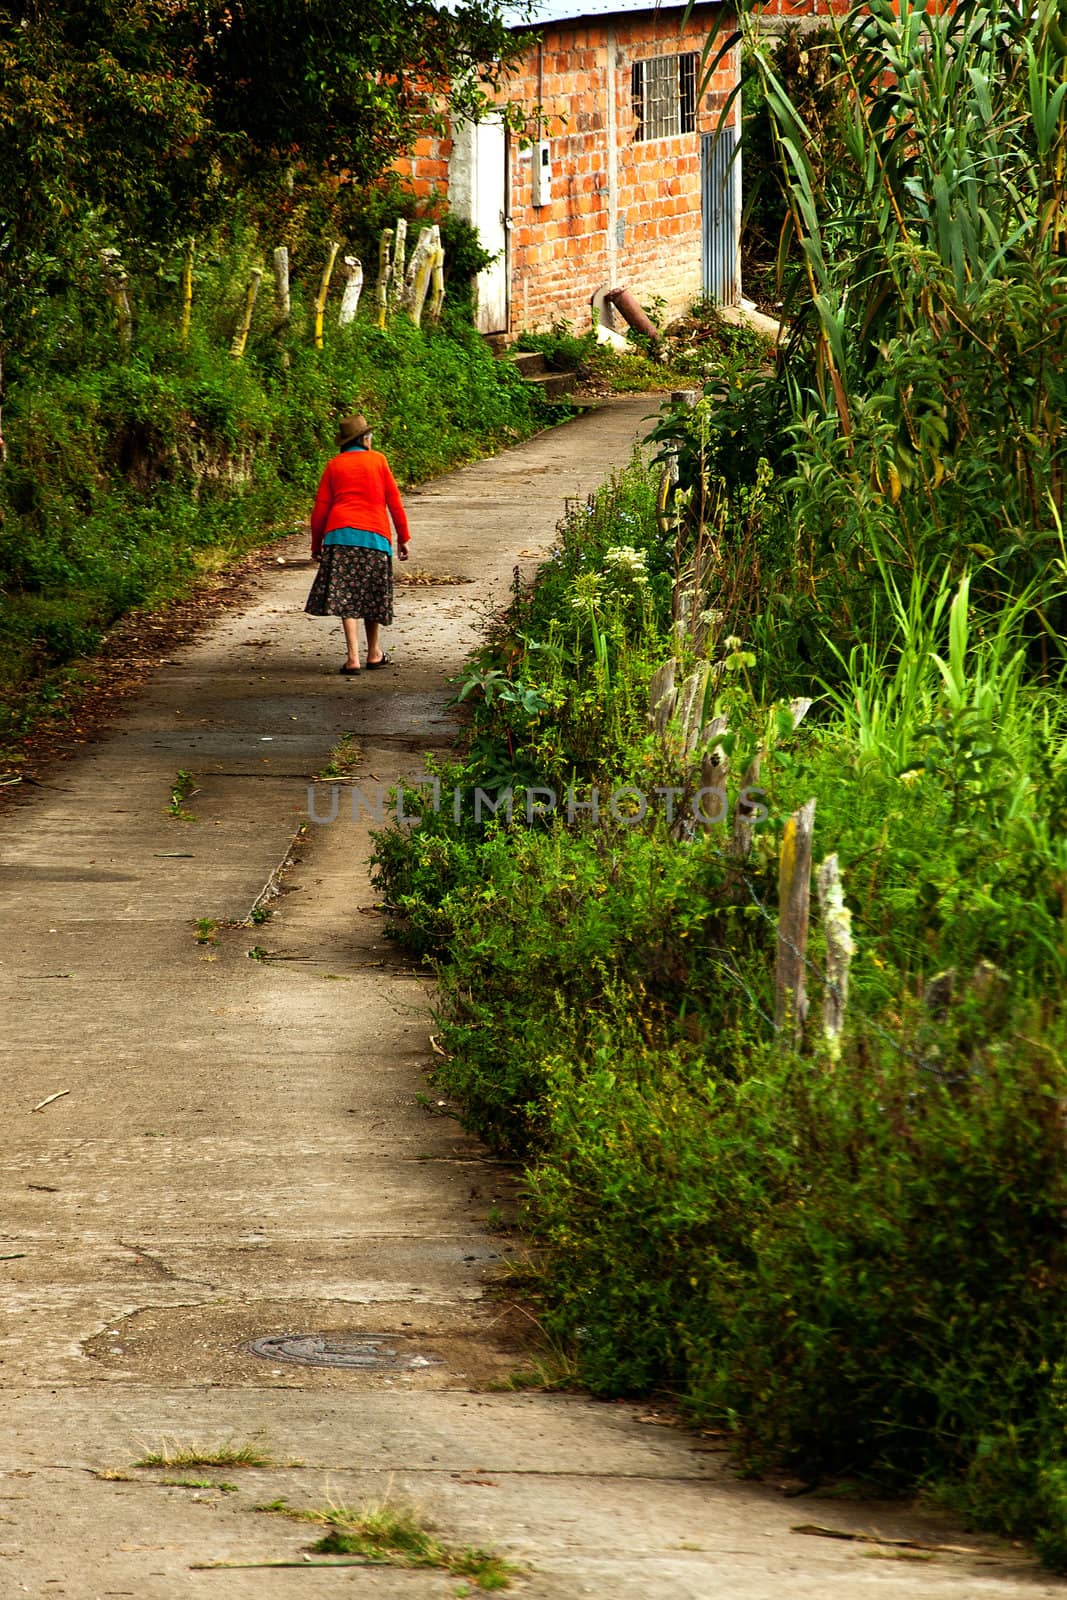 An elderly woman walks down a road in rural South America.